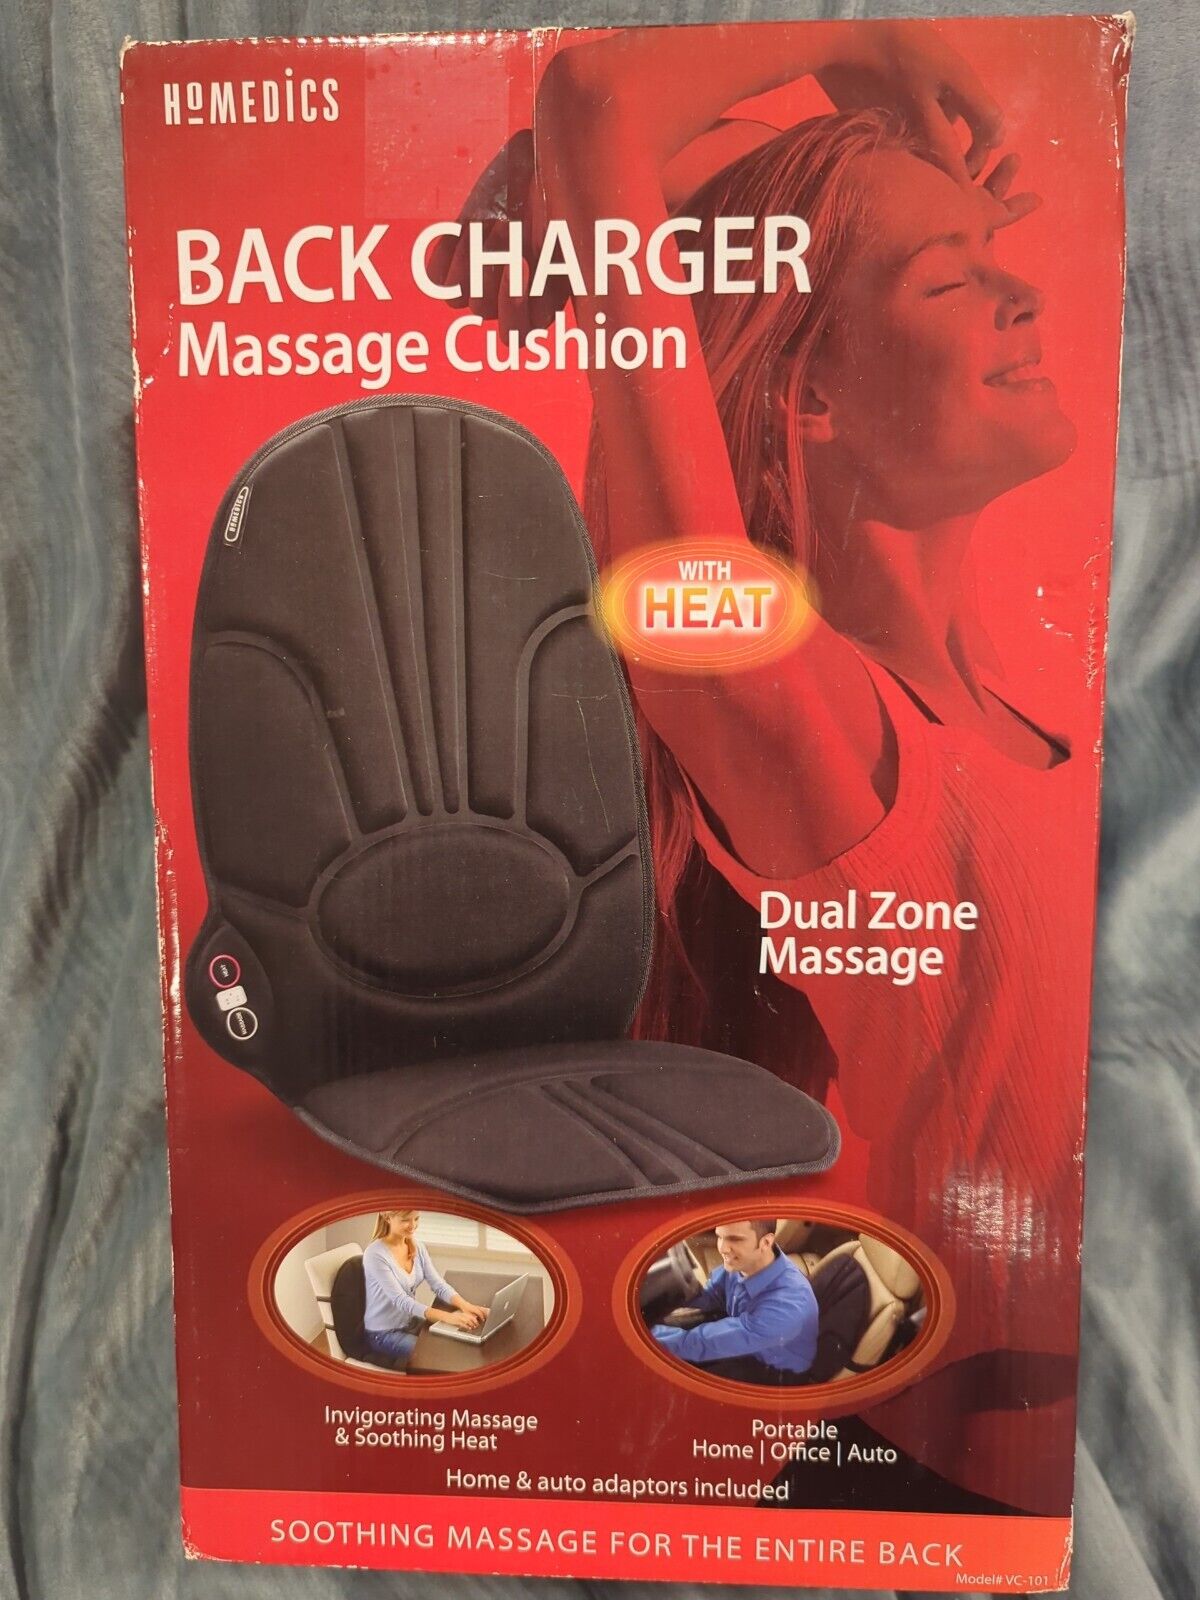 Civic I Mose HoMedics Back Charger Massage Cushion With Heat Black for sale online | eBay